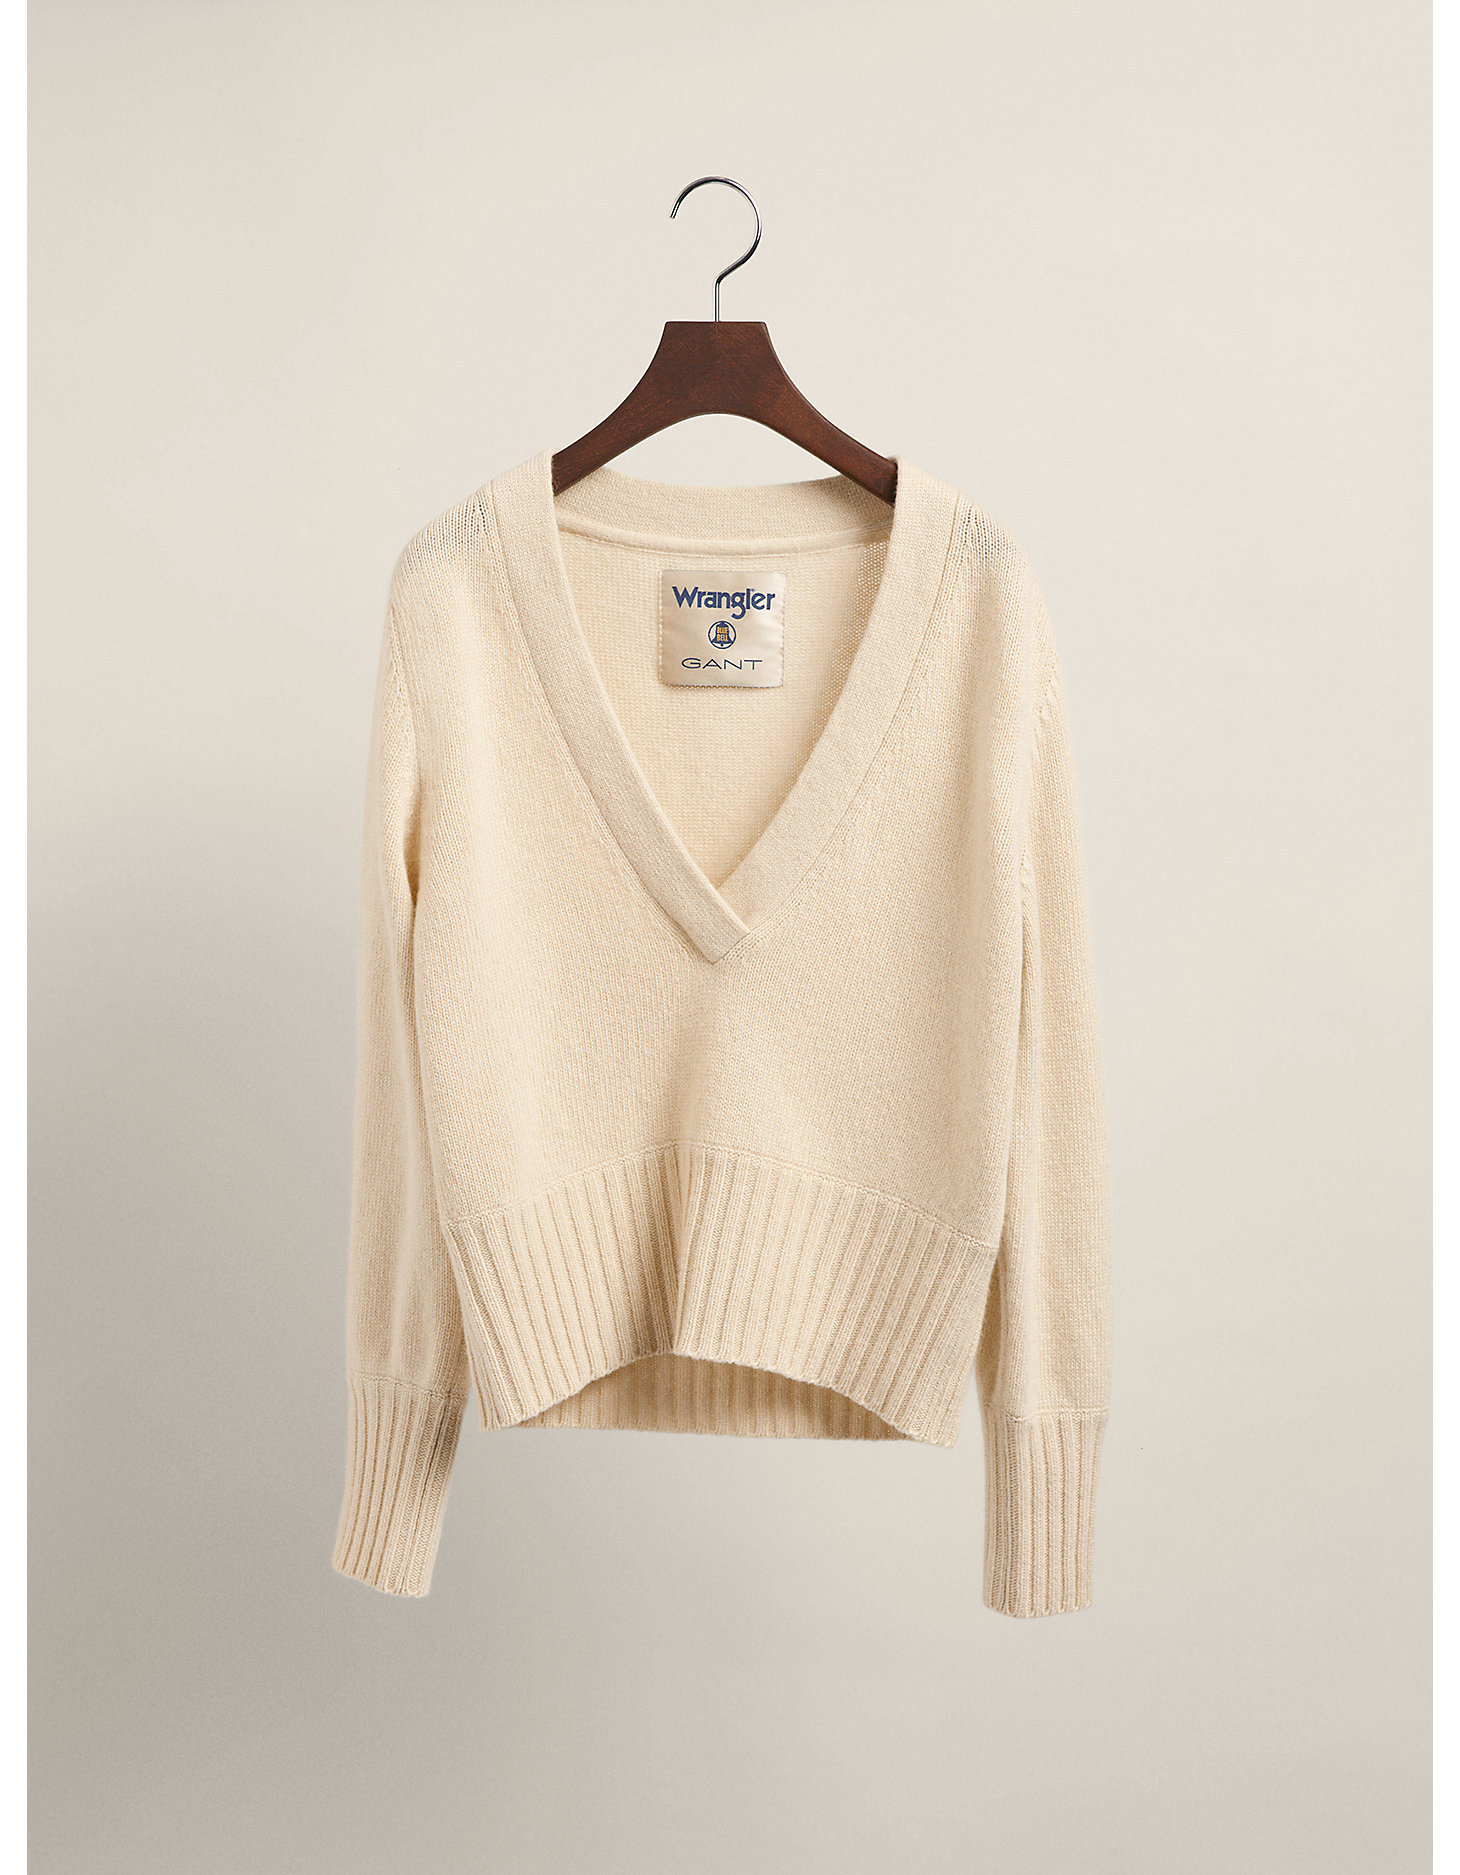 GANT x Wrangler Women's Cashmere Blend Sweater in Vintage Cream alternative view 3